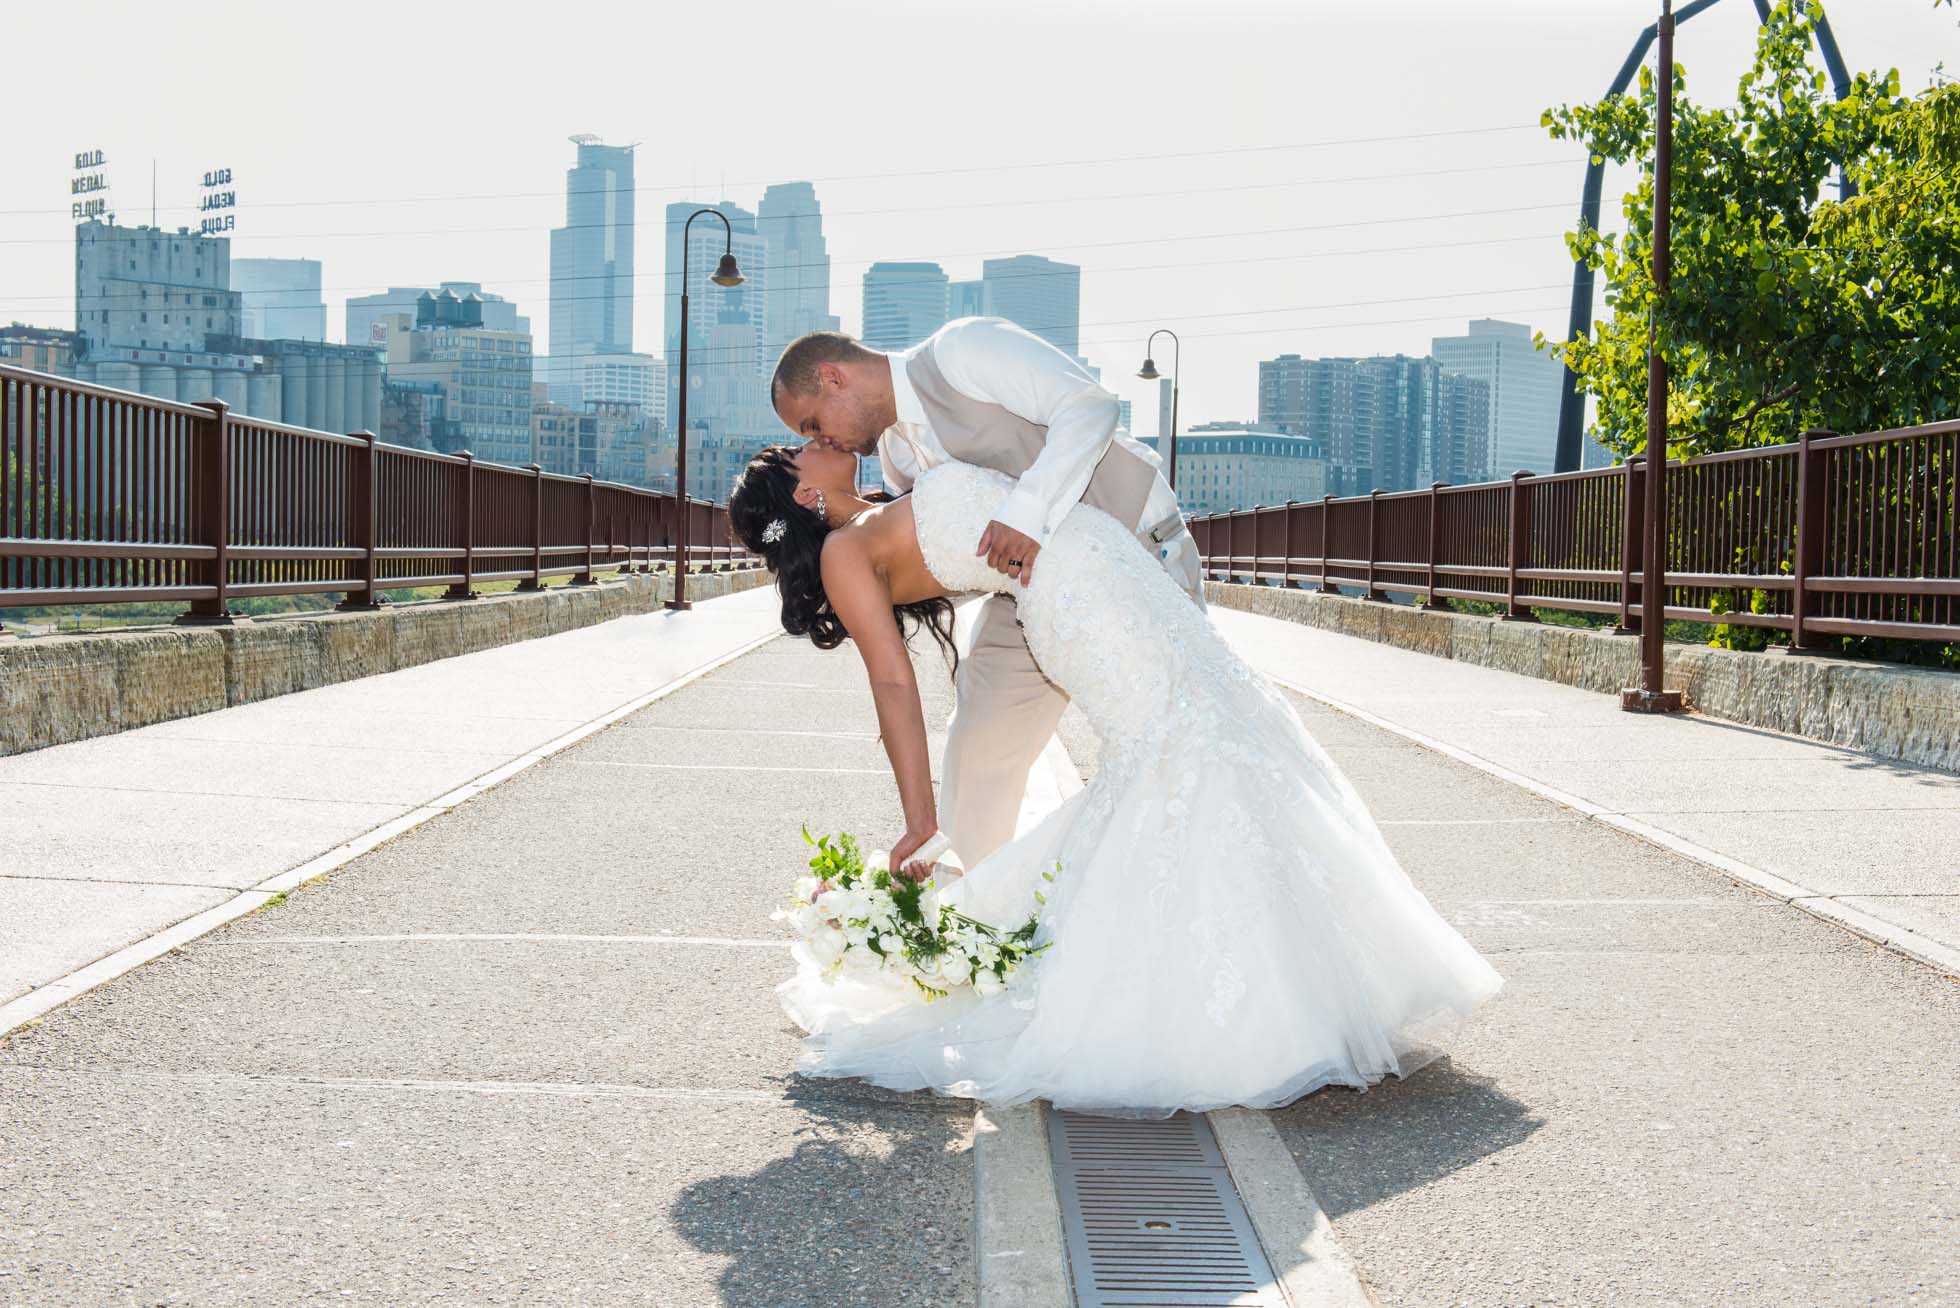 Wedding Photography Ideas From Famous Wedding Photographers Worldwide